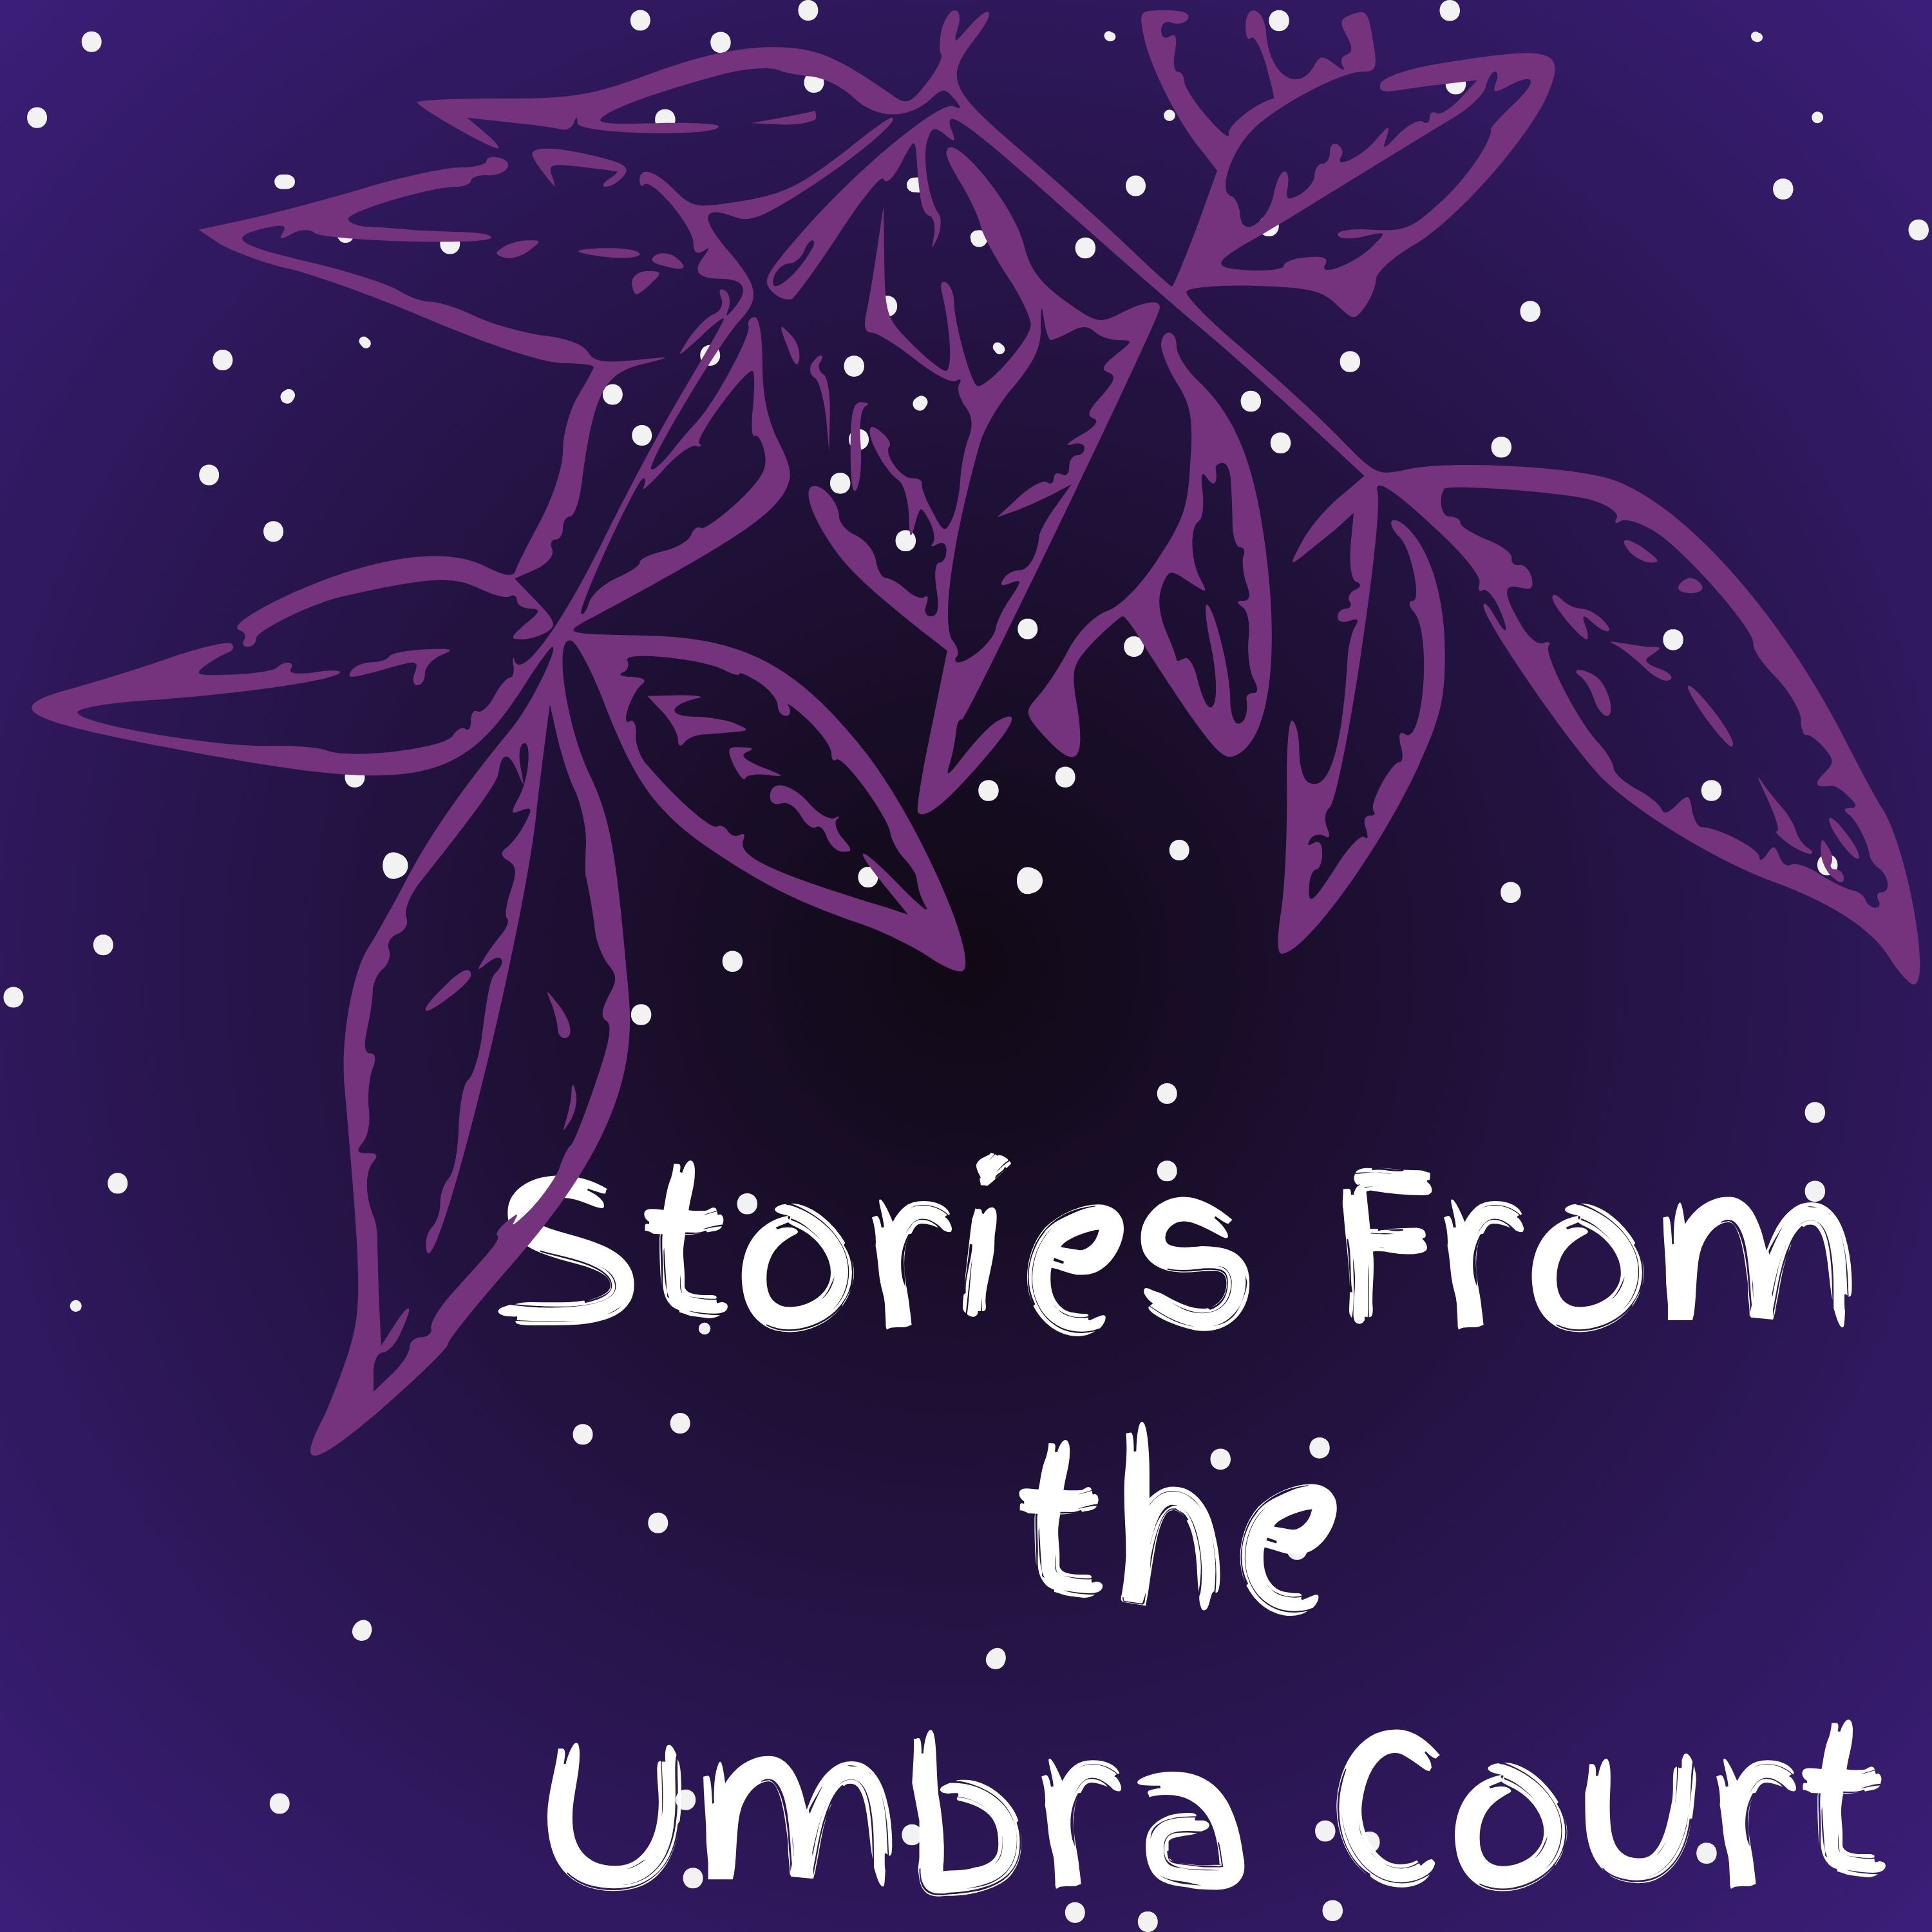 The Umbra Court